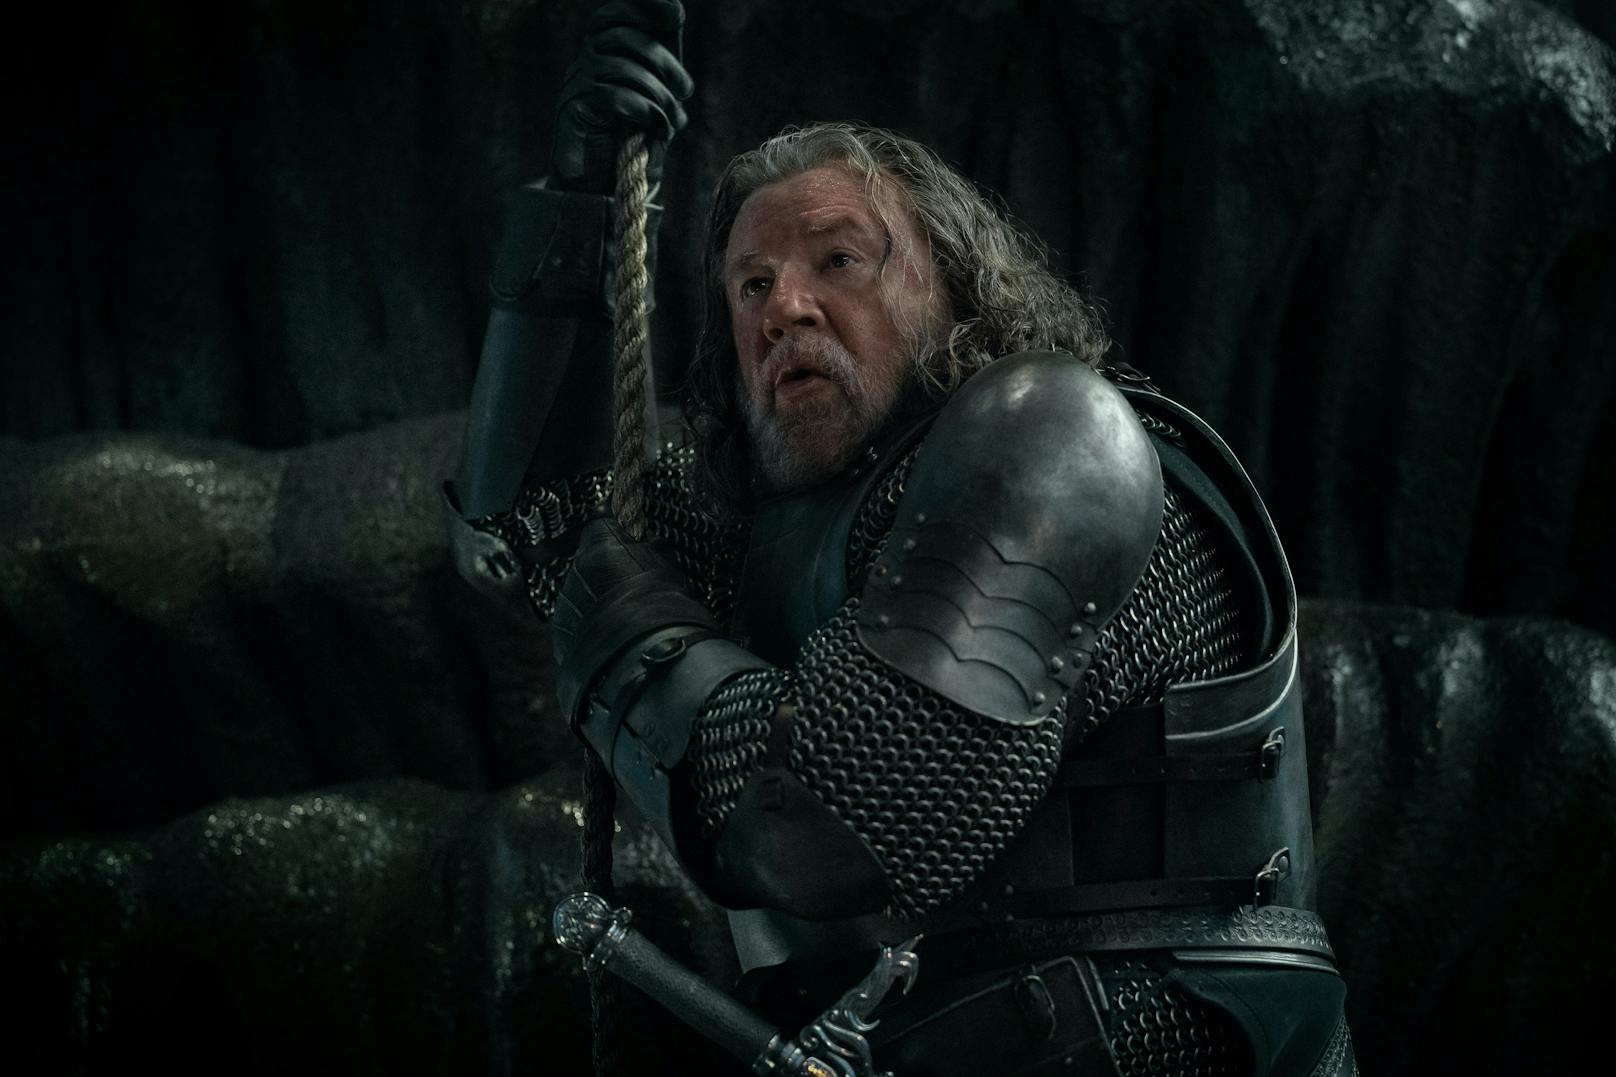 Der Brite Ray Winstone ("Departed", "Beowulf") als Lord Bayford